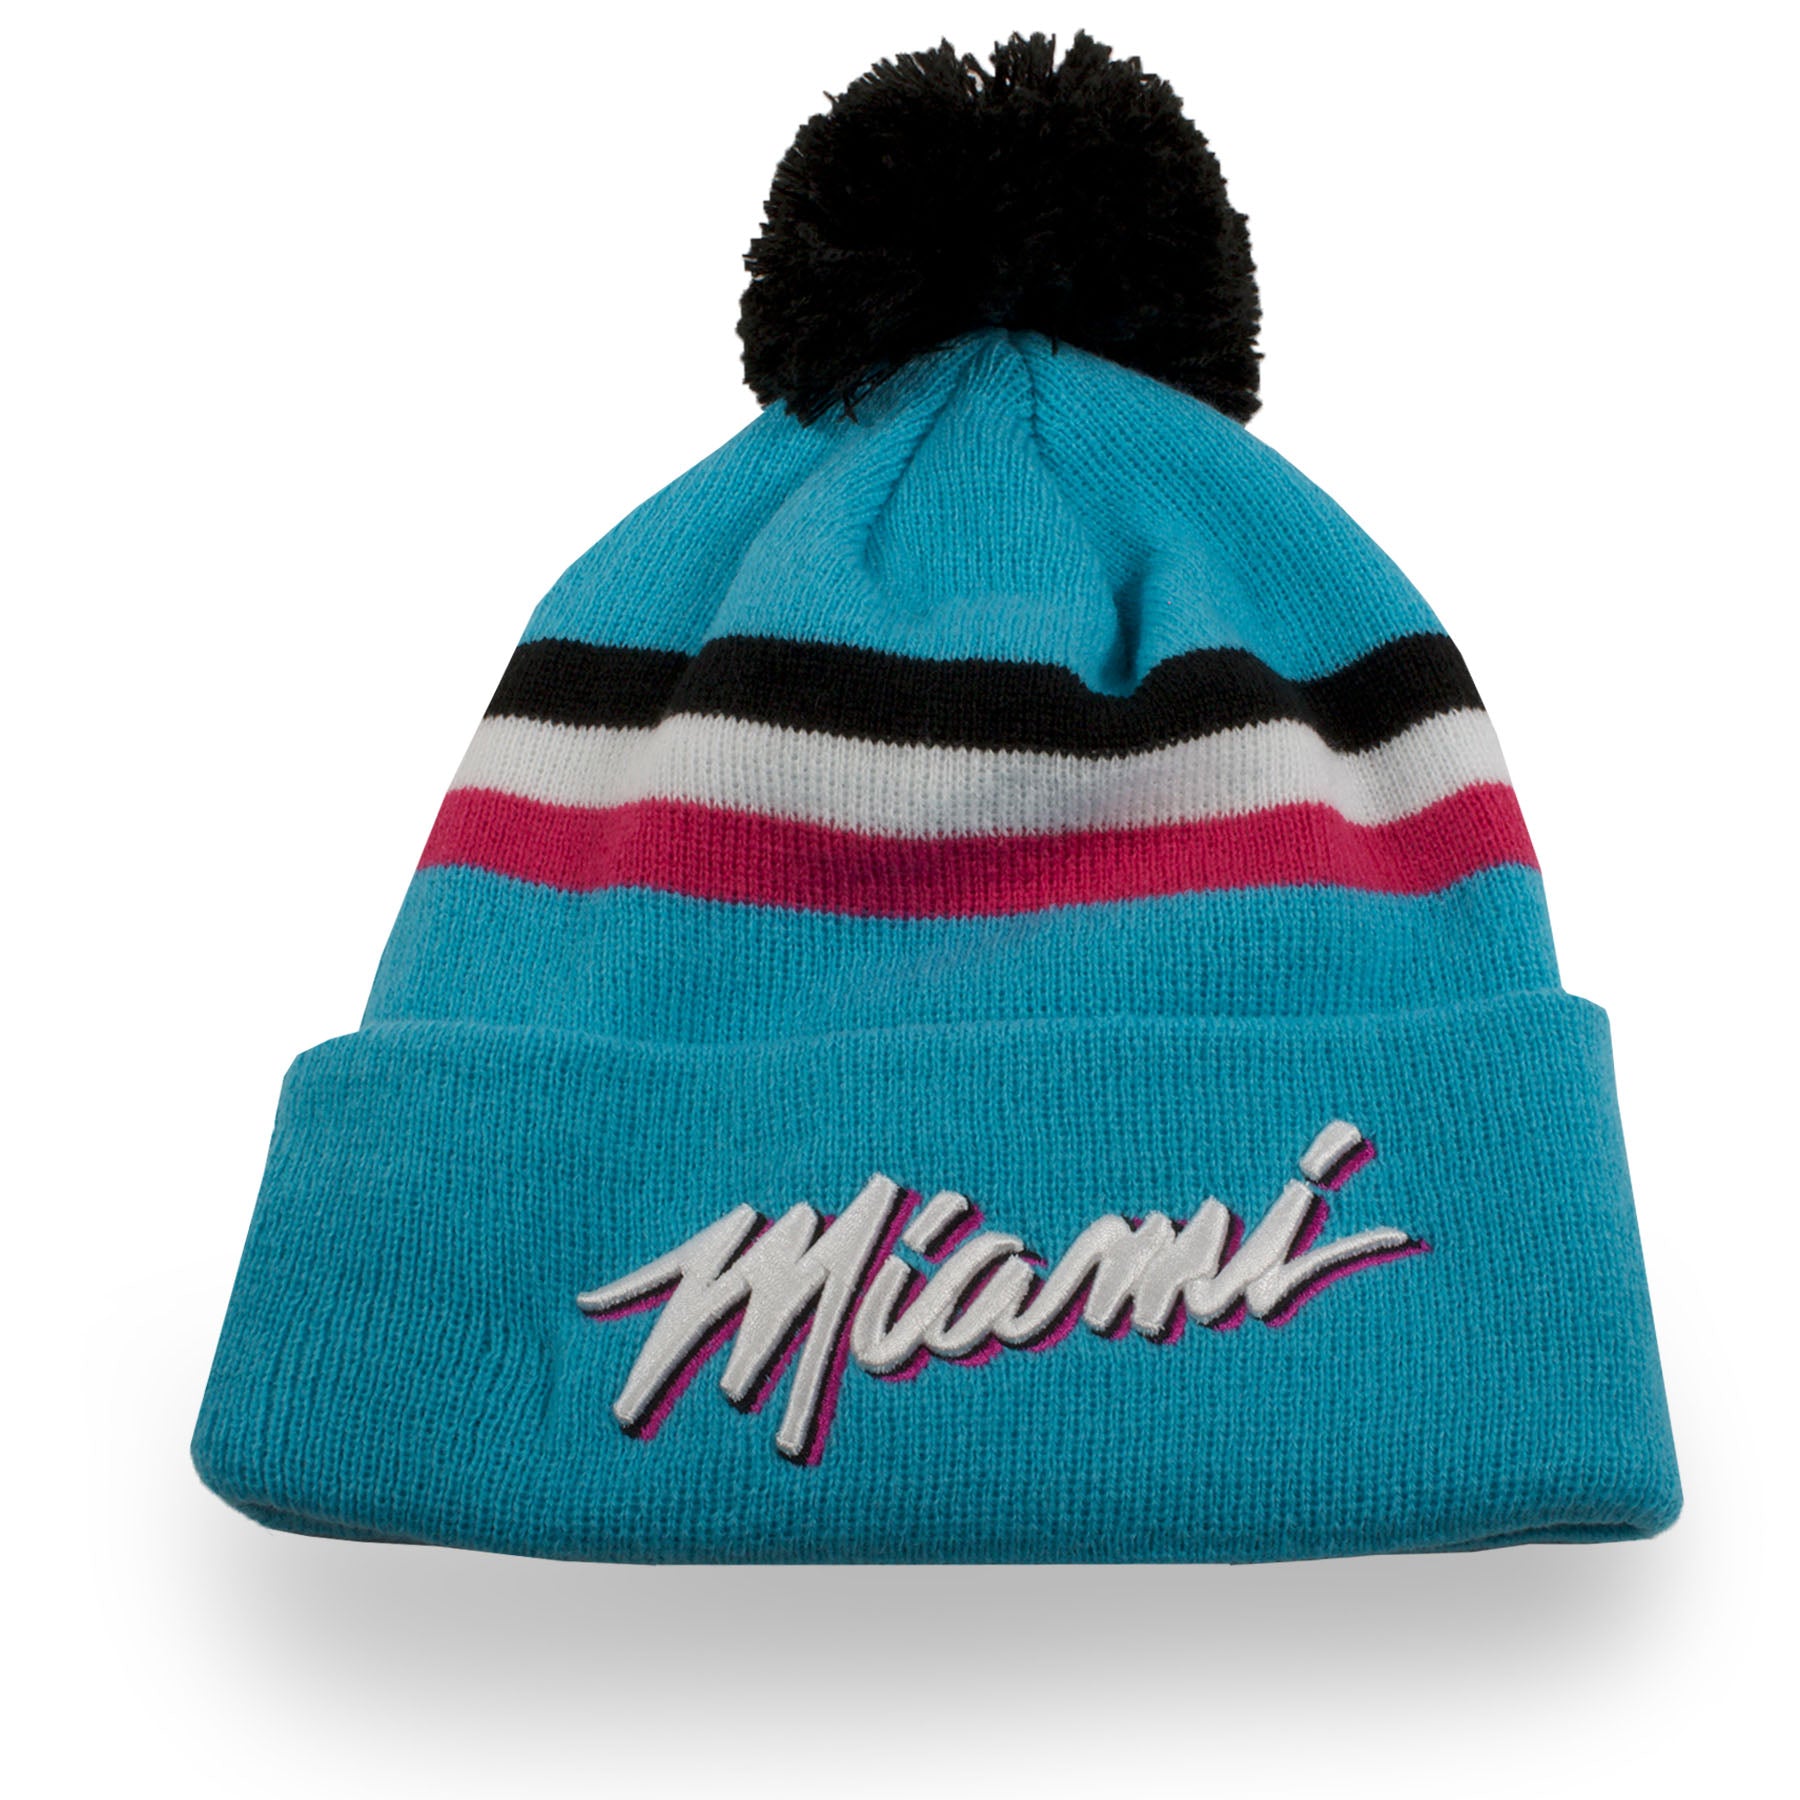 Miami heat winter hat